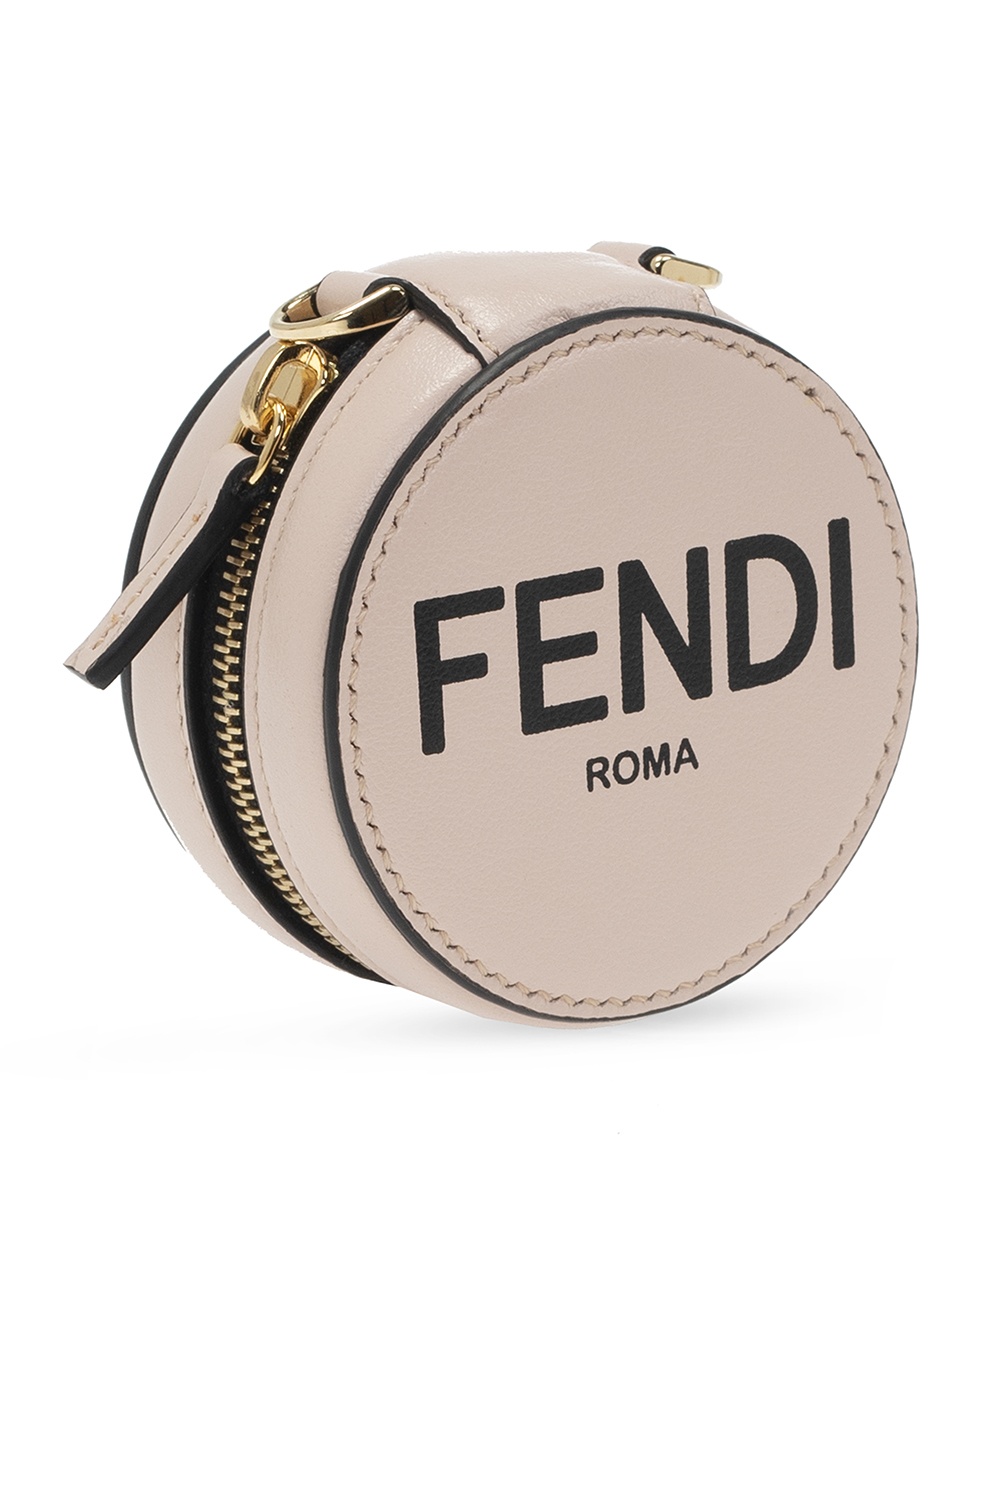 Fendi Coin purse